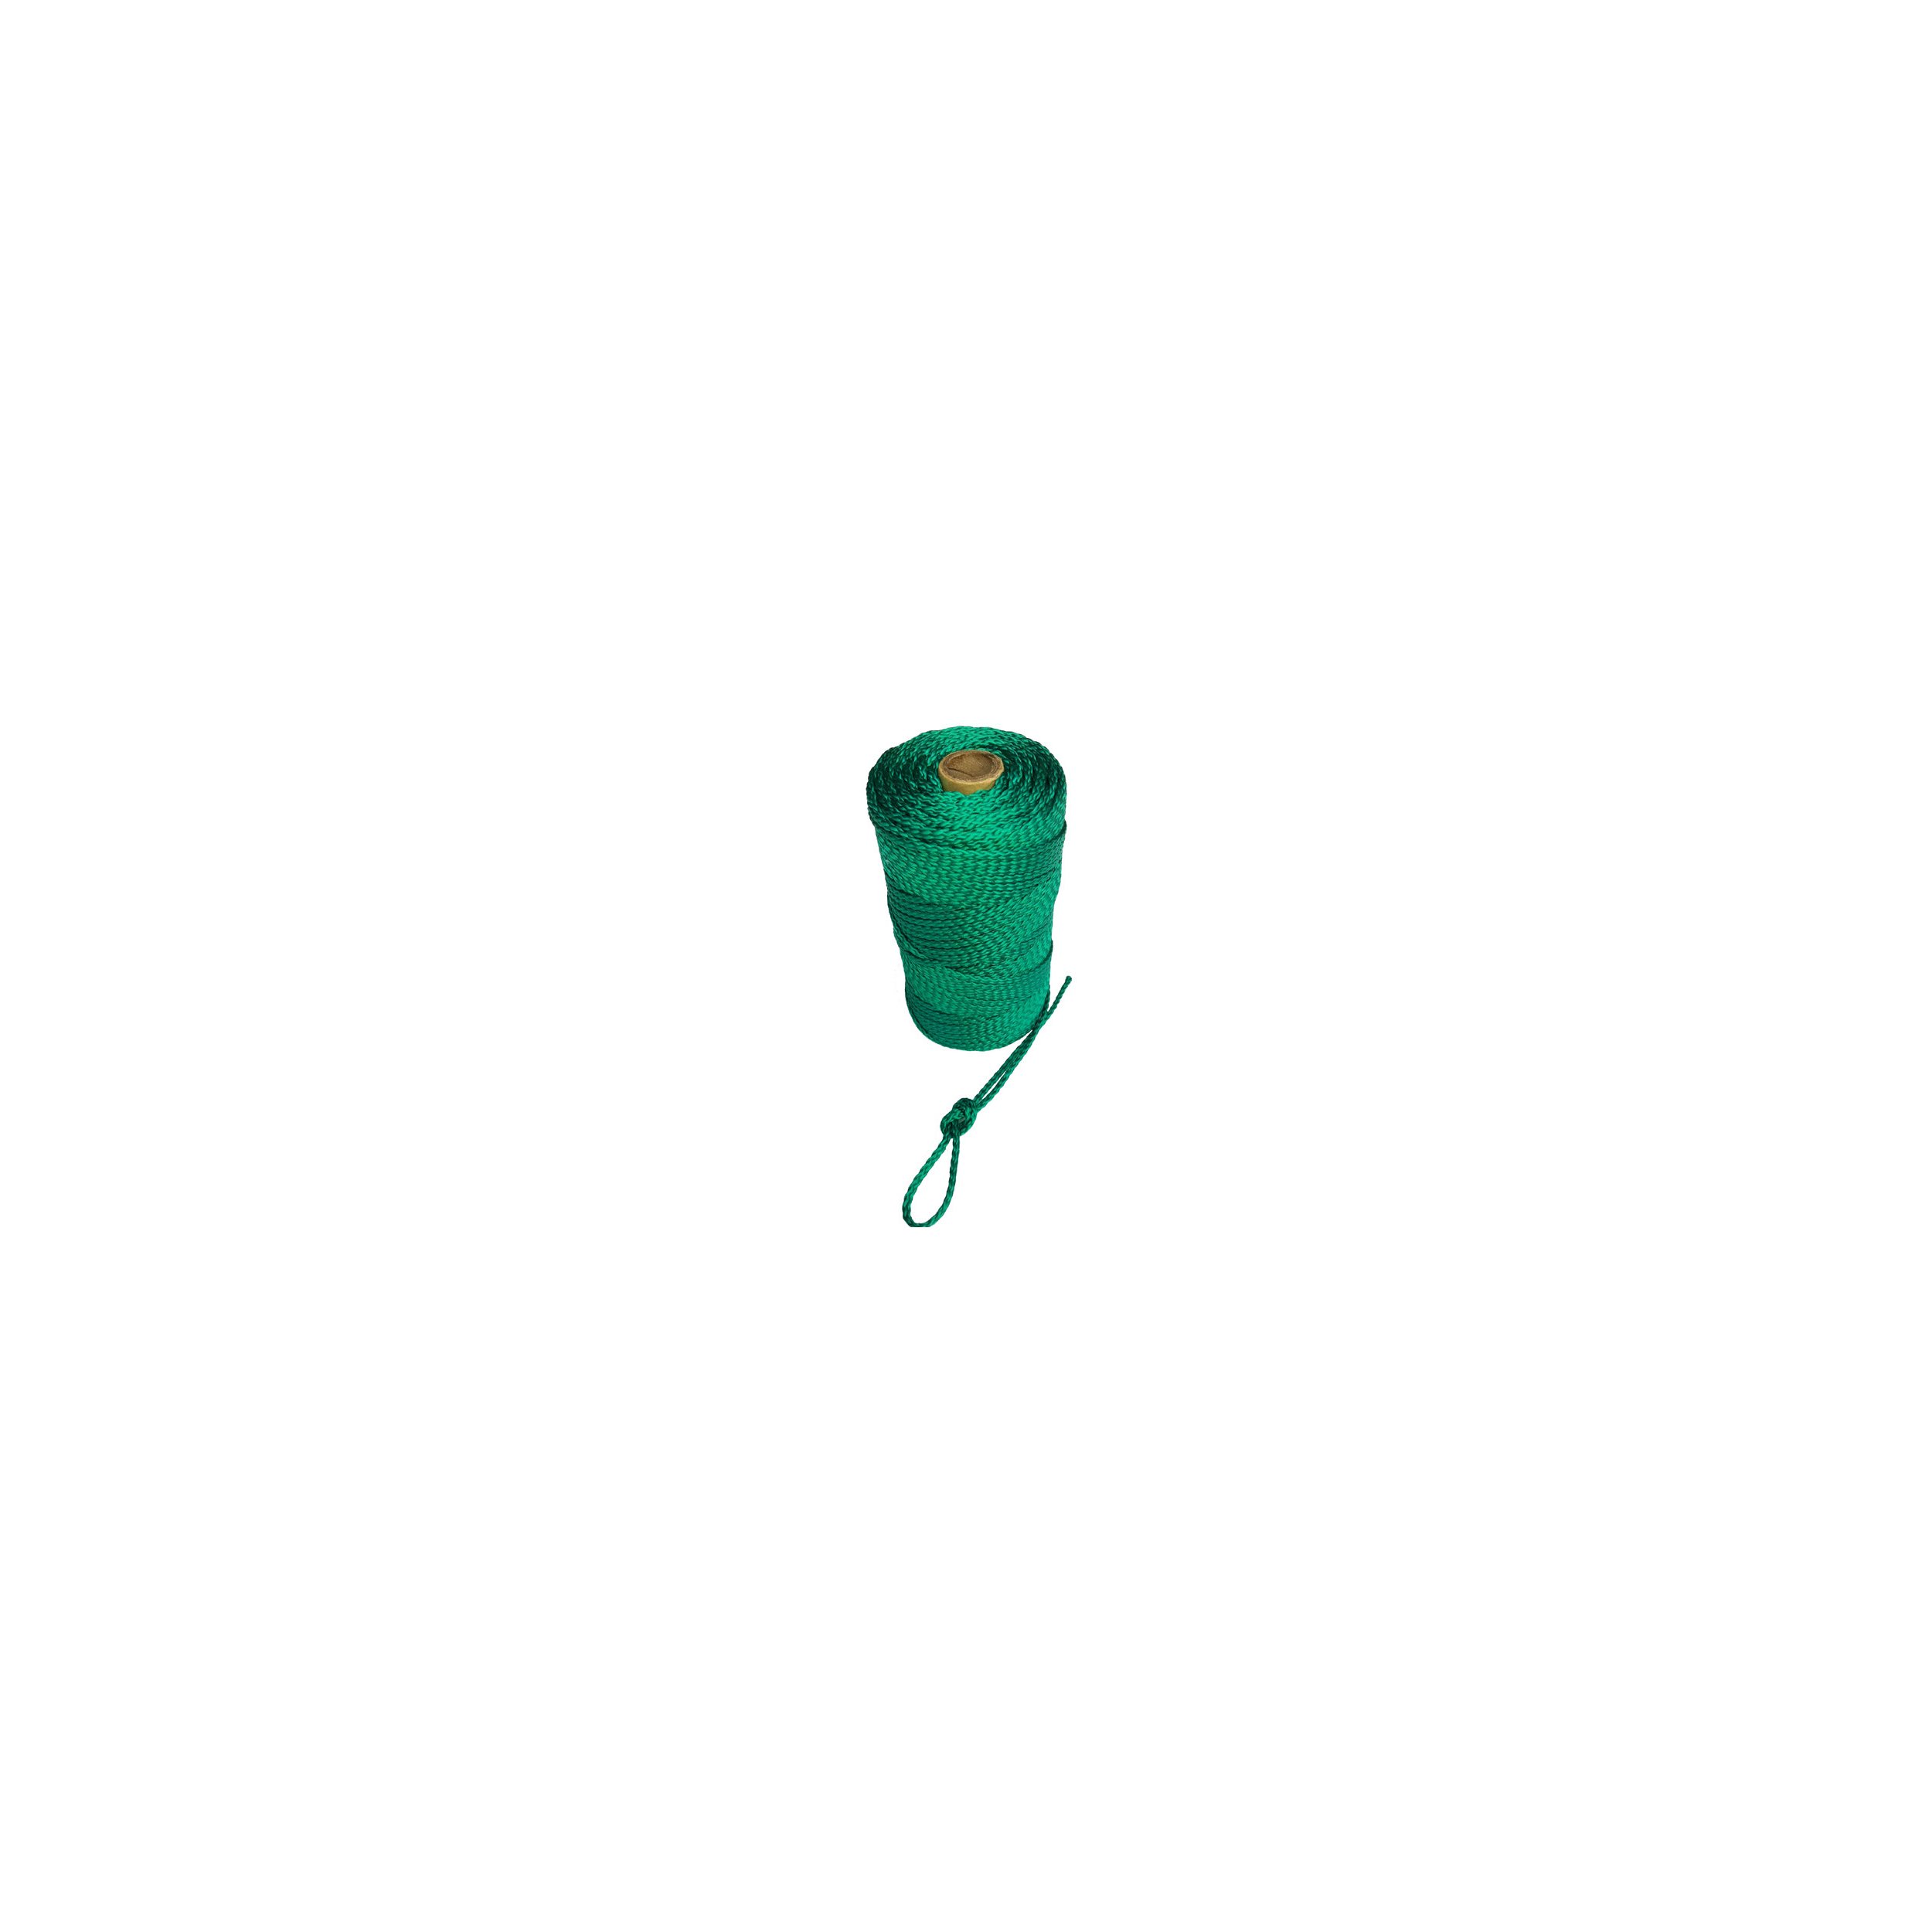 Reepschnur  6 mm Farbe grün - per Meter